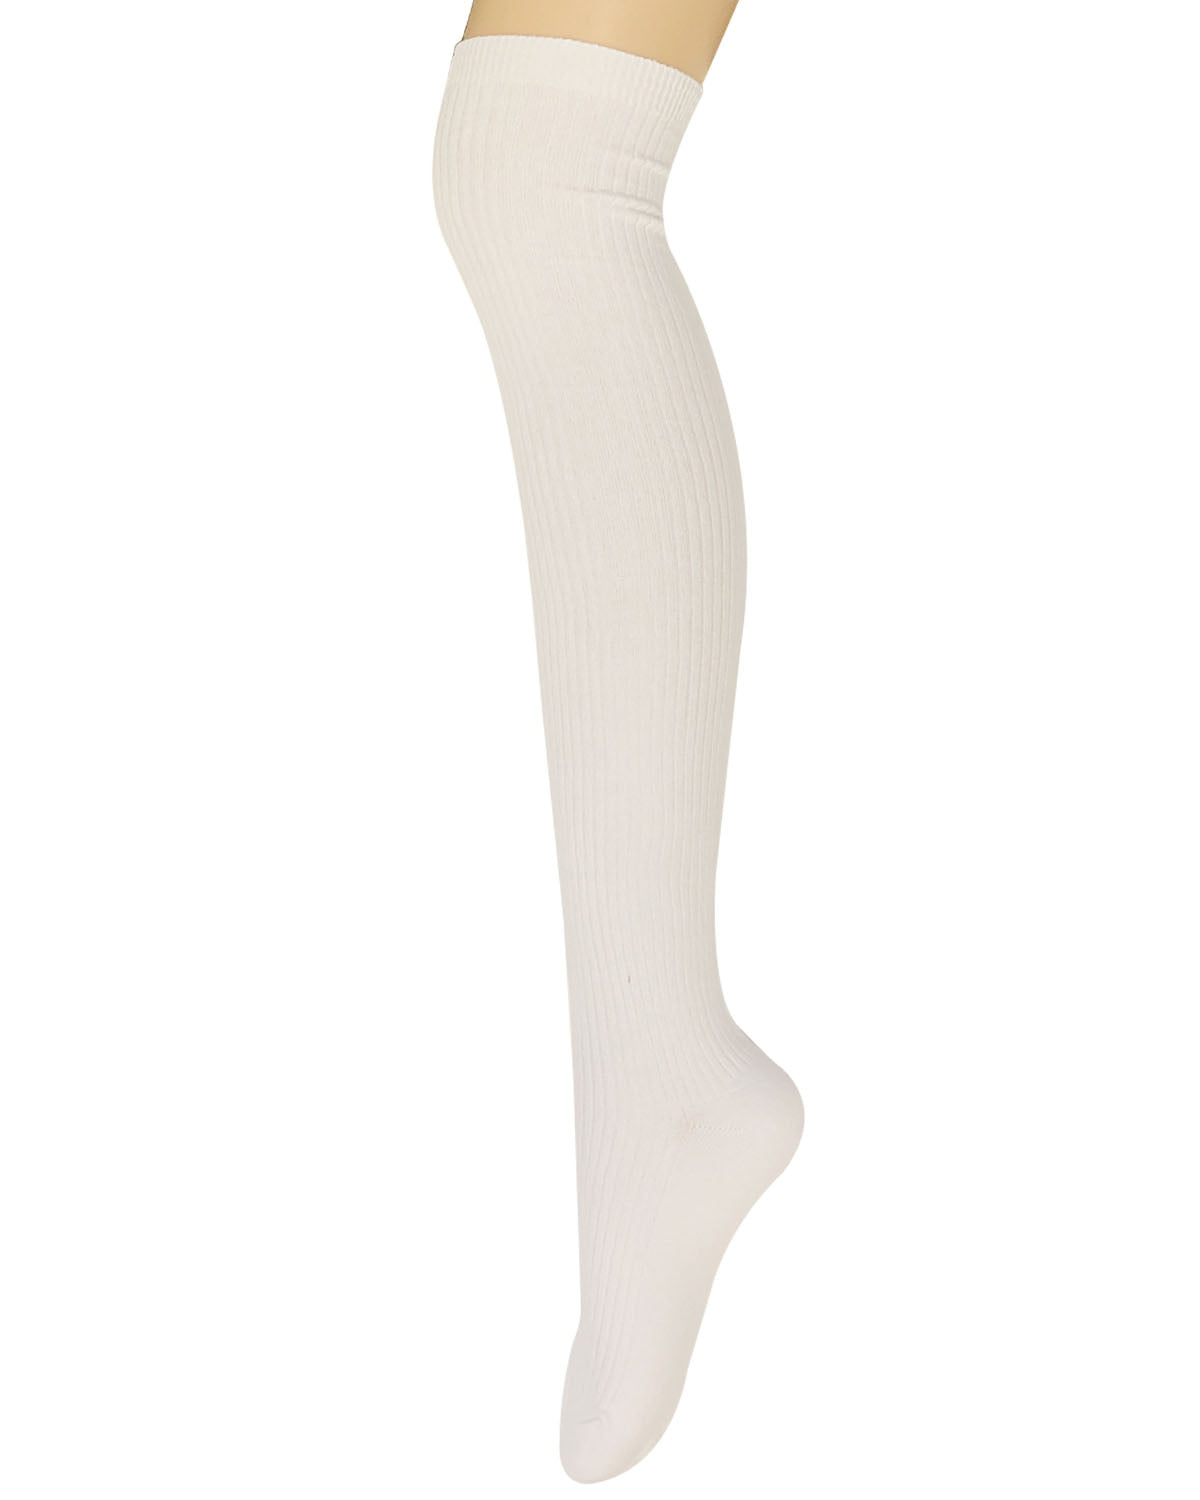 WrapablesÂ® Women's Ribbed Knee High Boot Socks